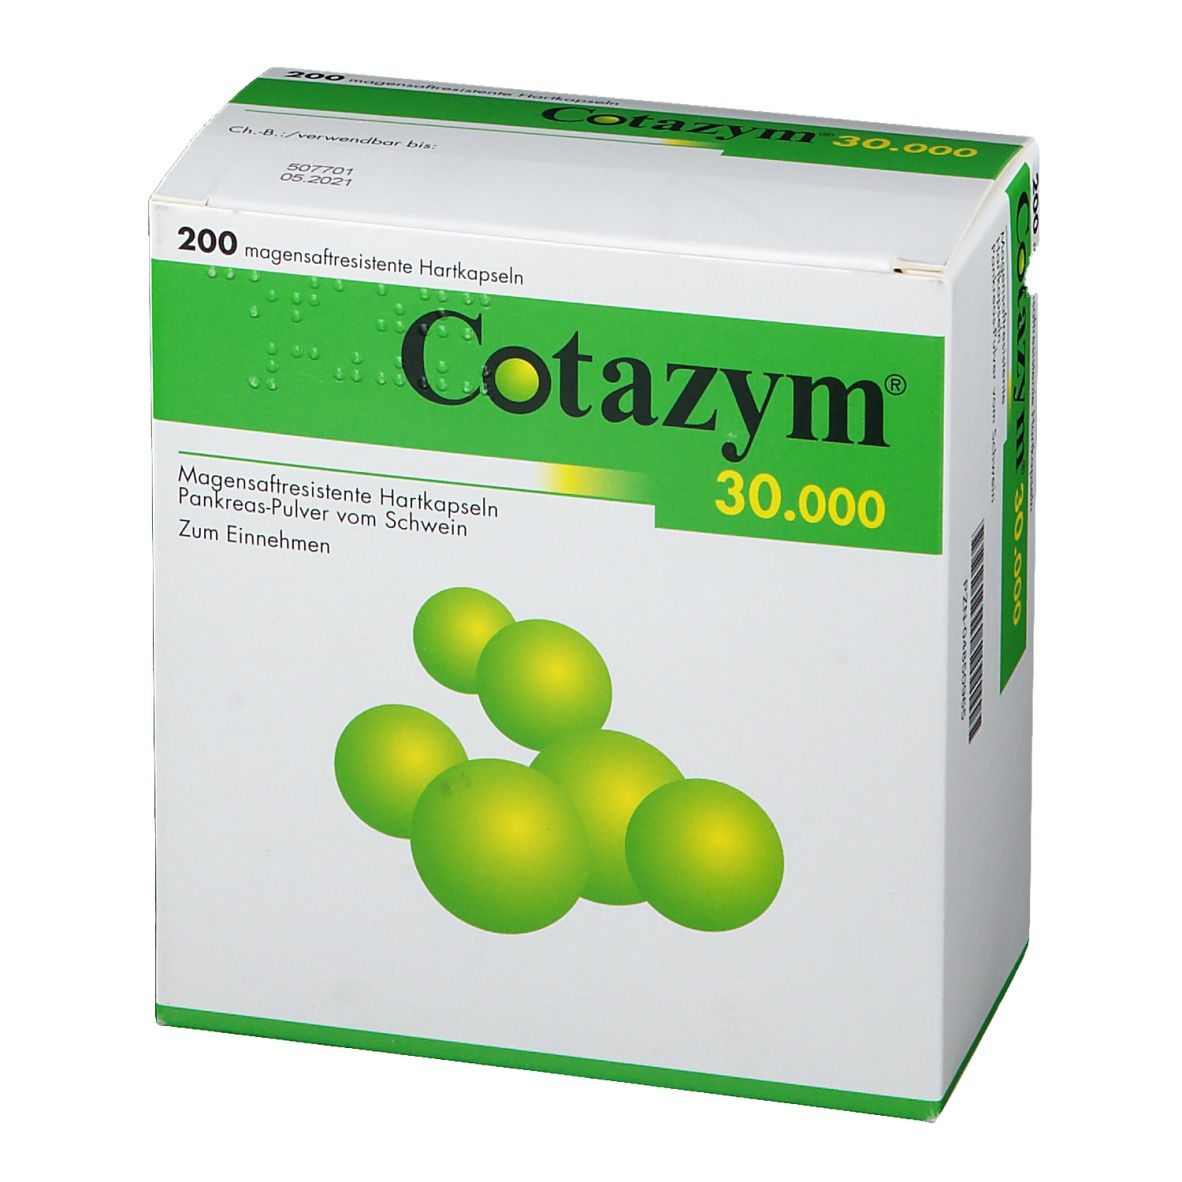 Cotazym® 30.000